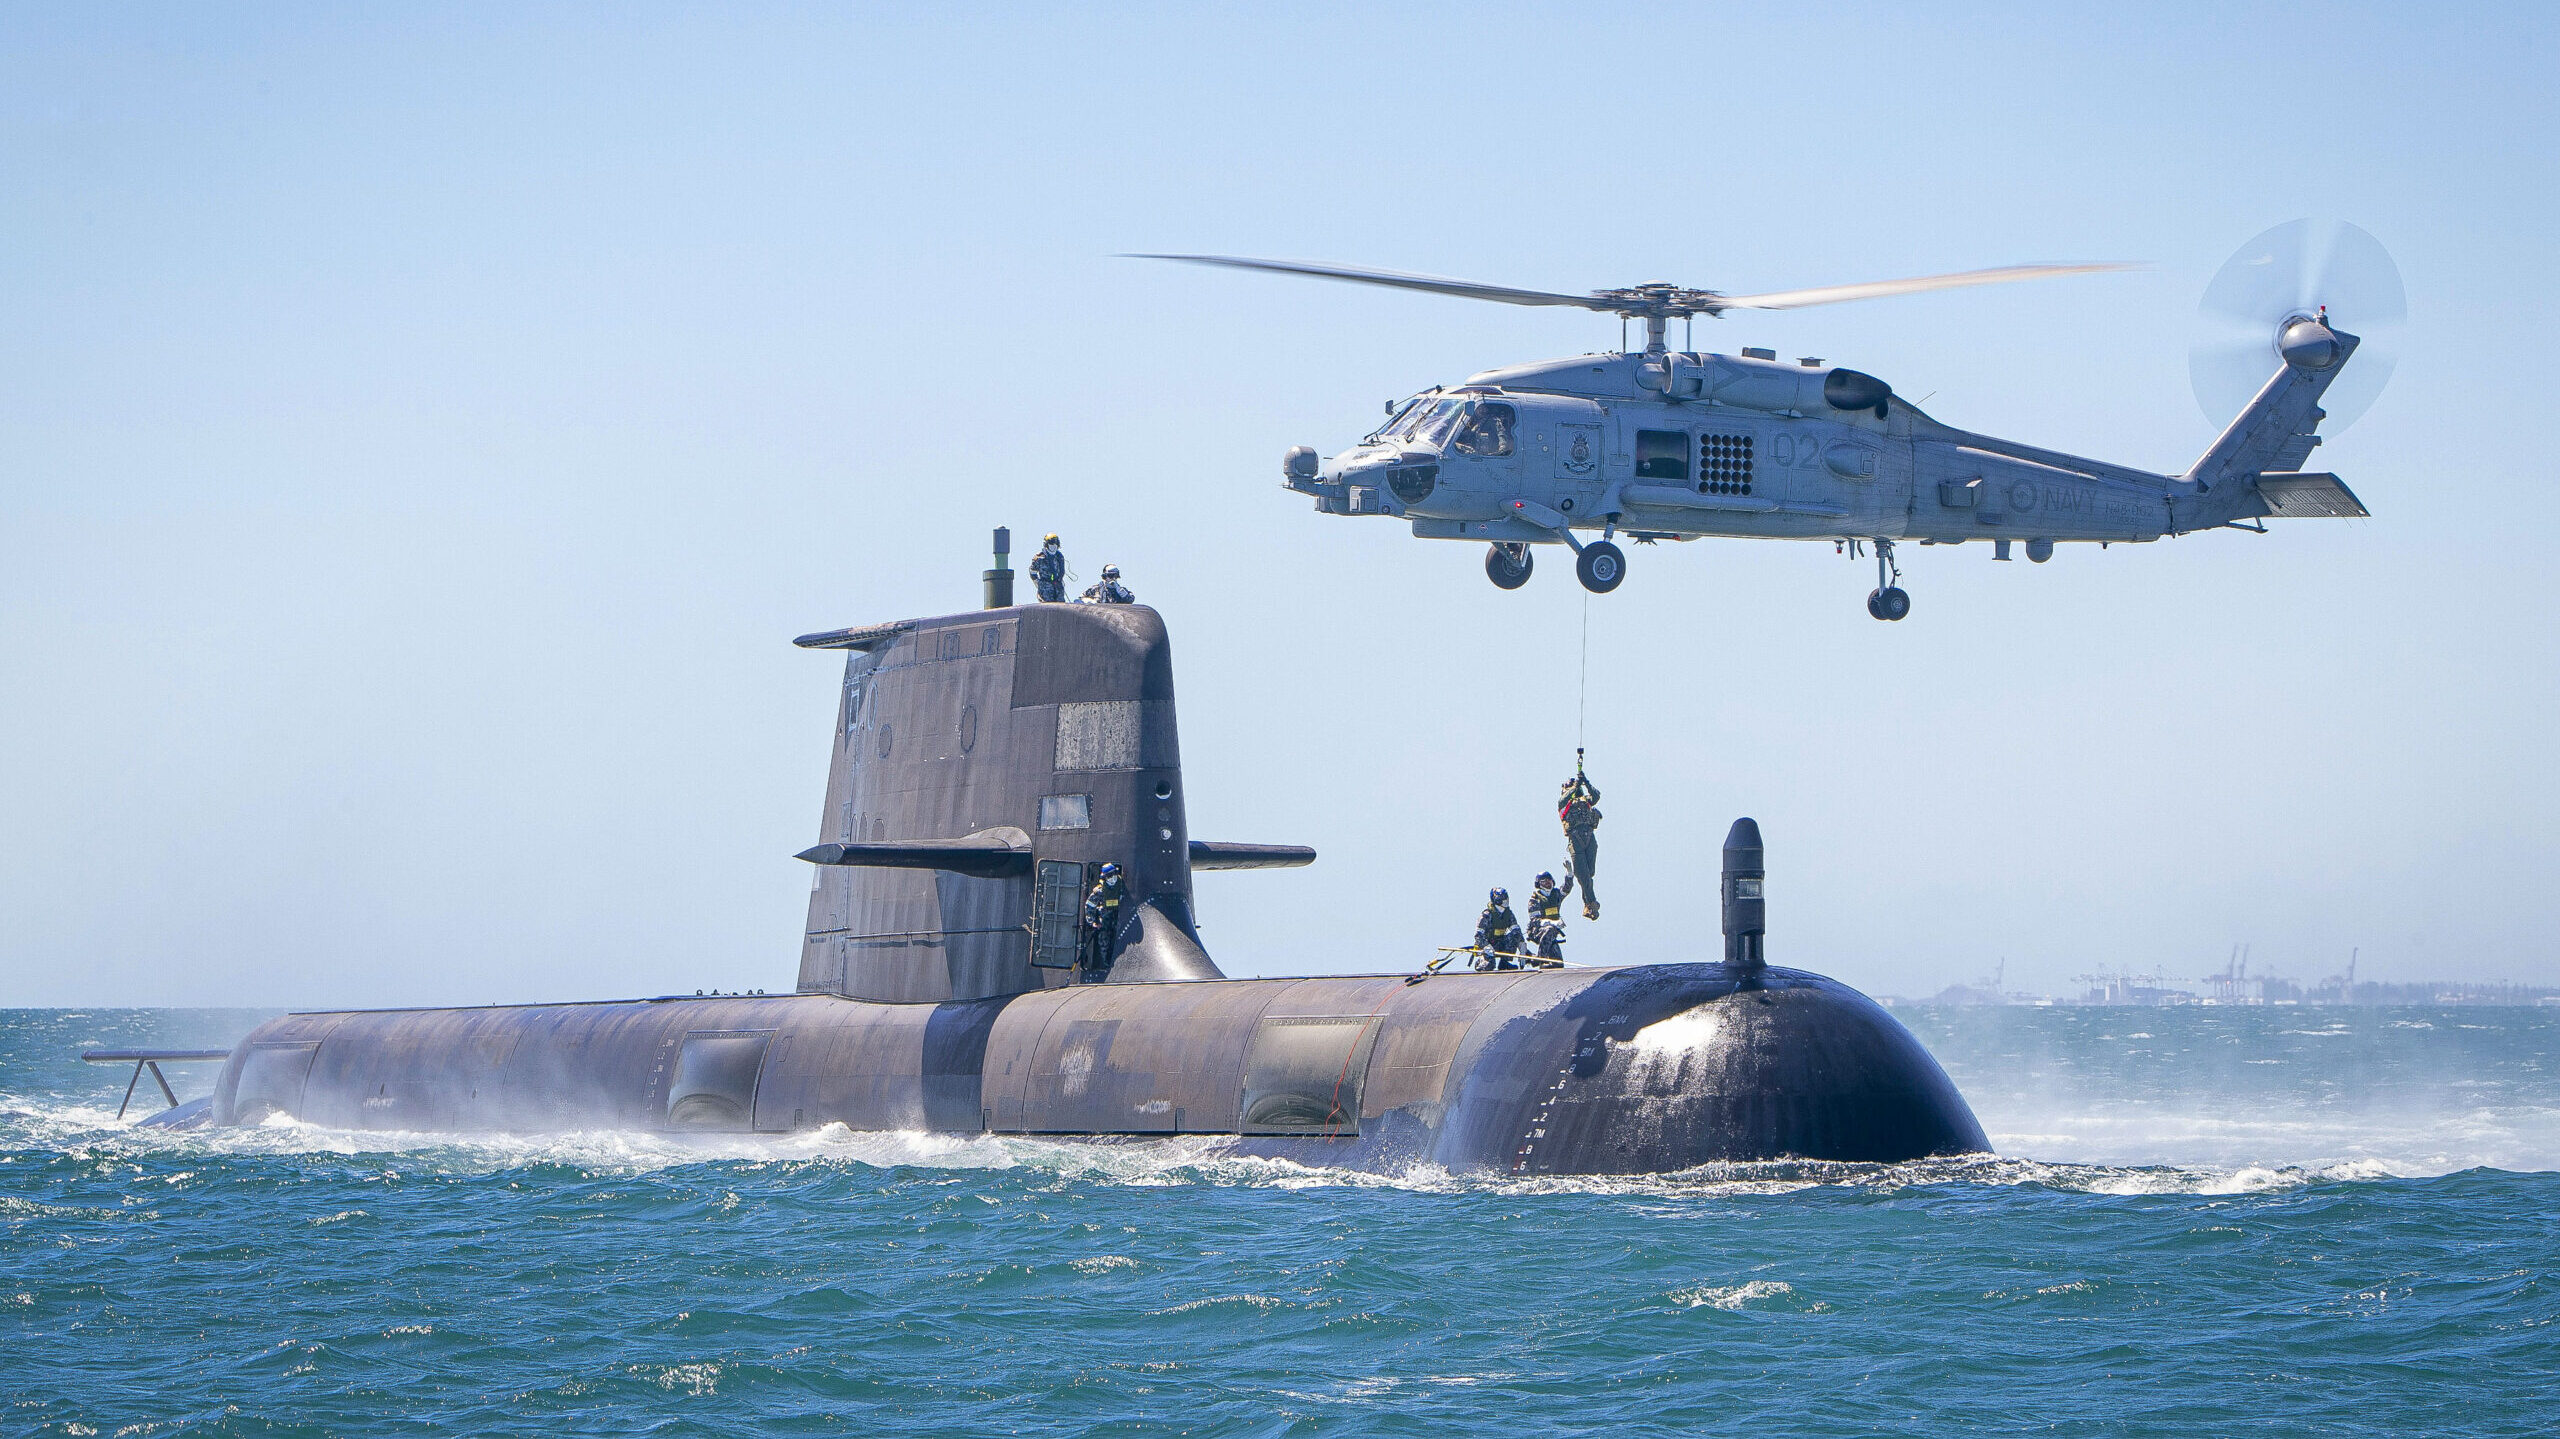 House advances bill to train Australian submariners alongside US counterparts